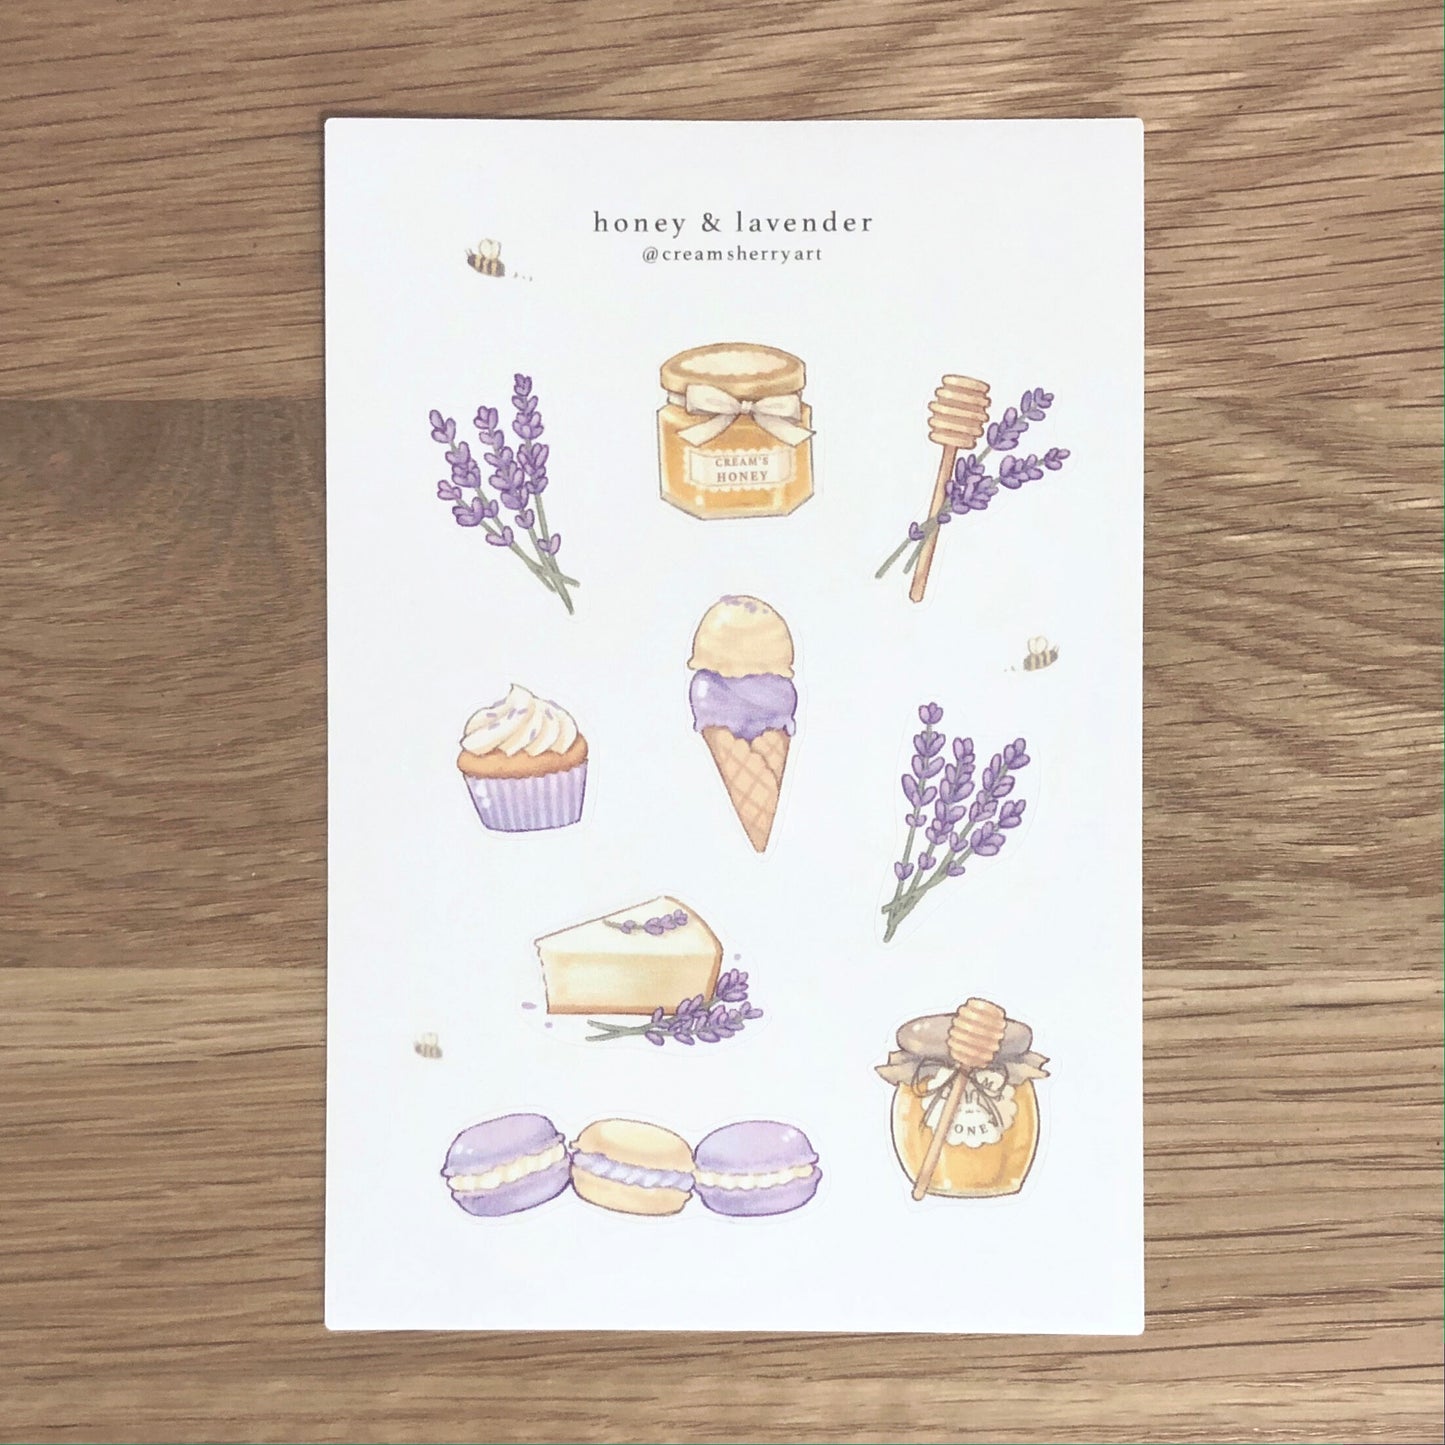 honey & lavender sticker sheet